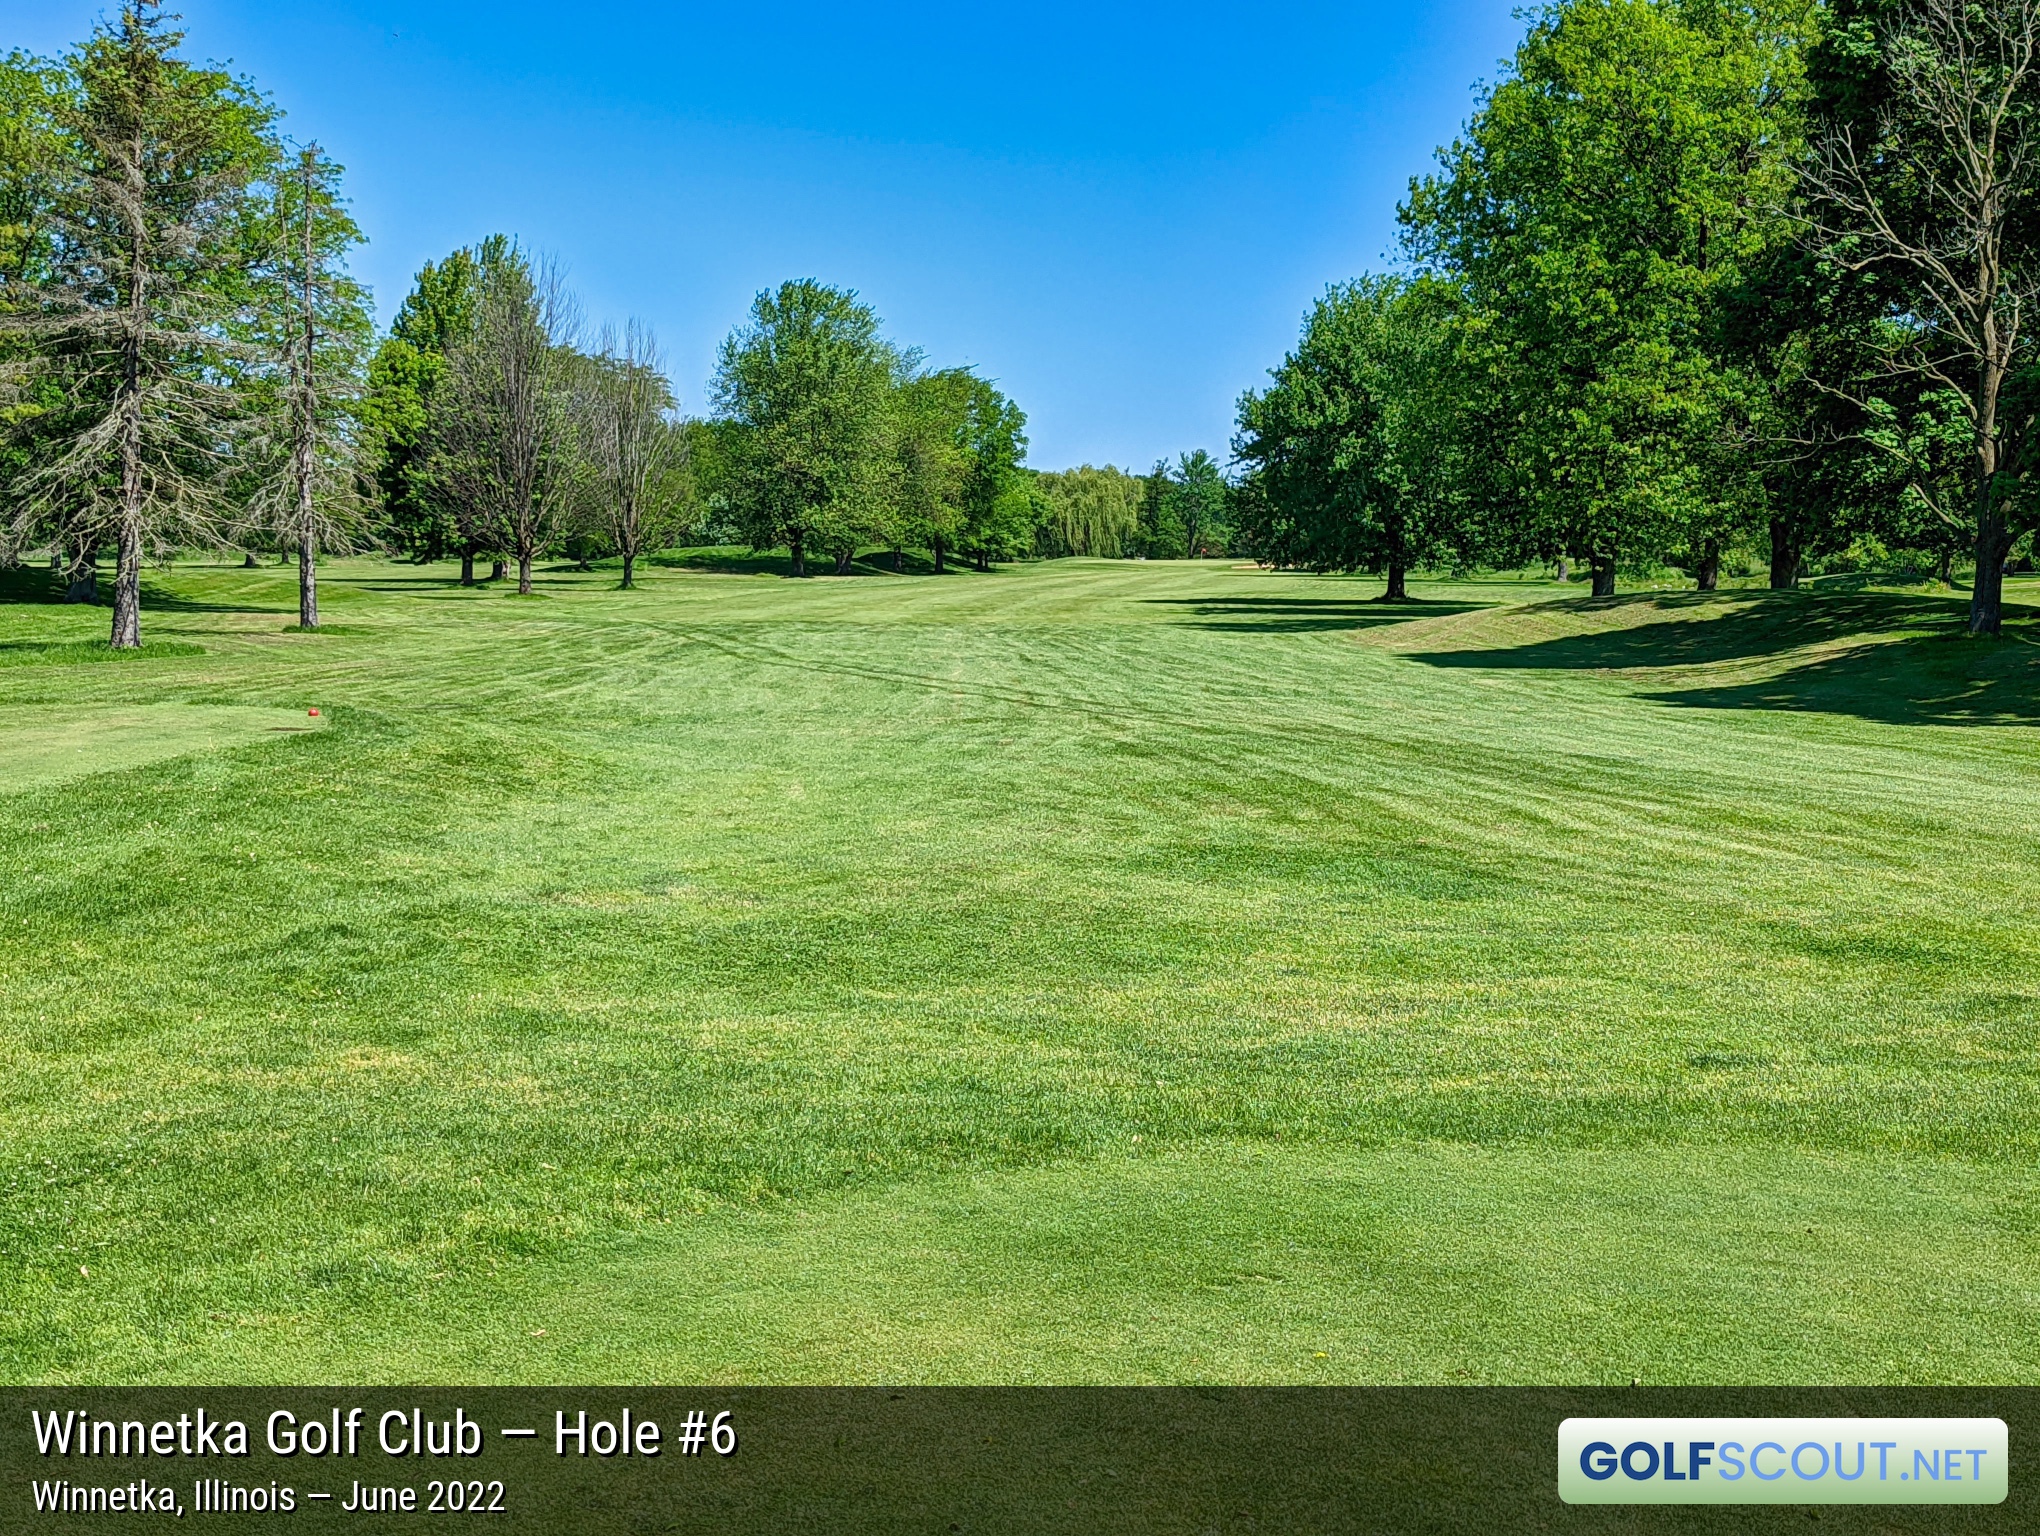 Photo of hole #6 at Winnetka Golf Club in Winnetka, Illinois. 